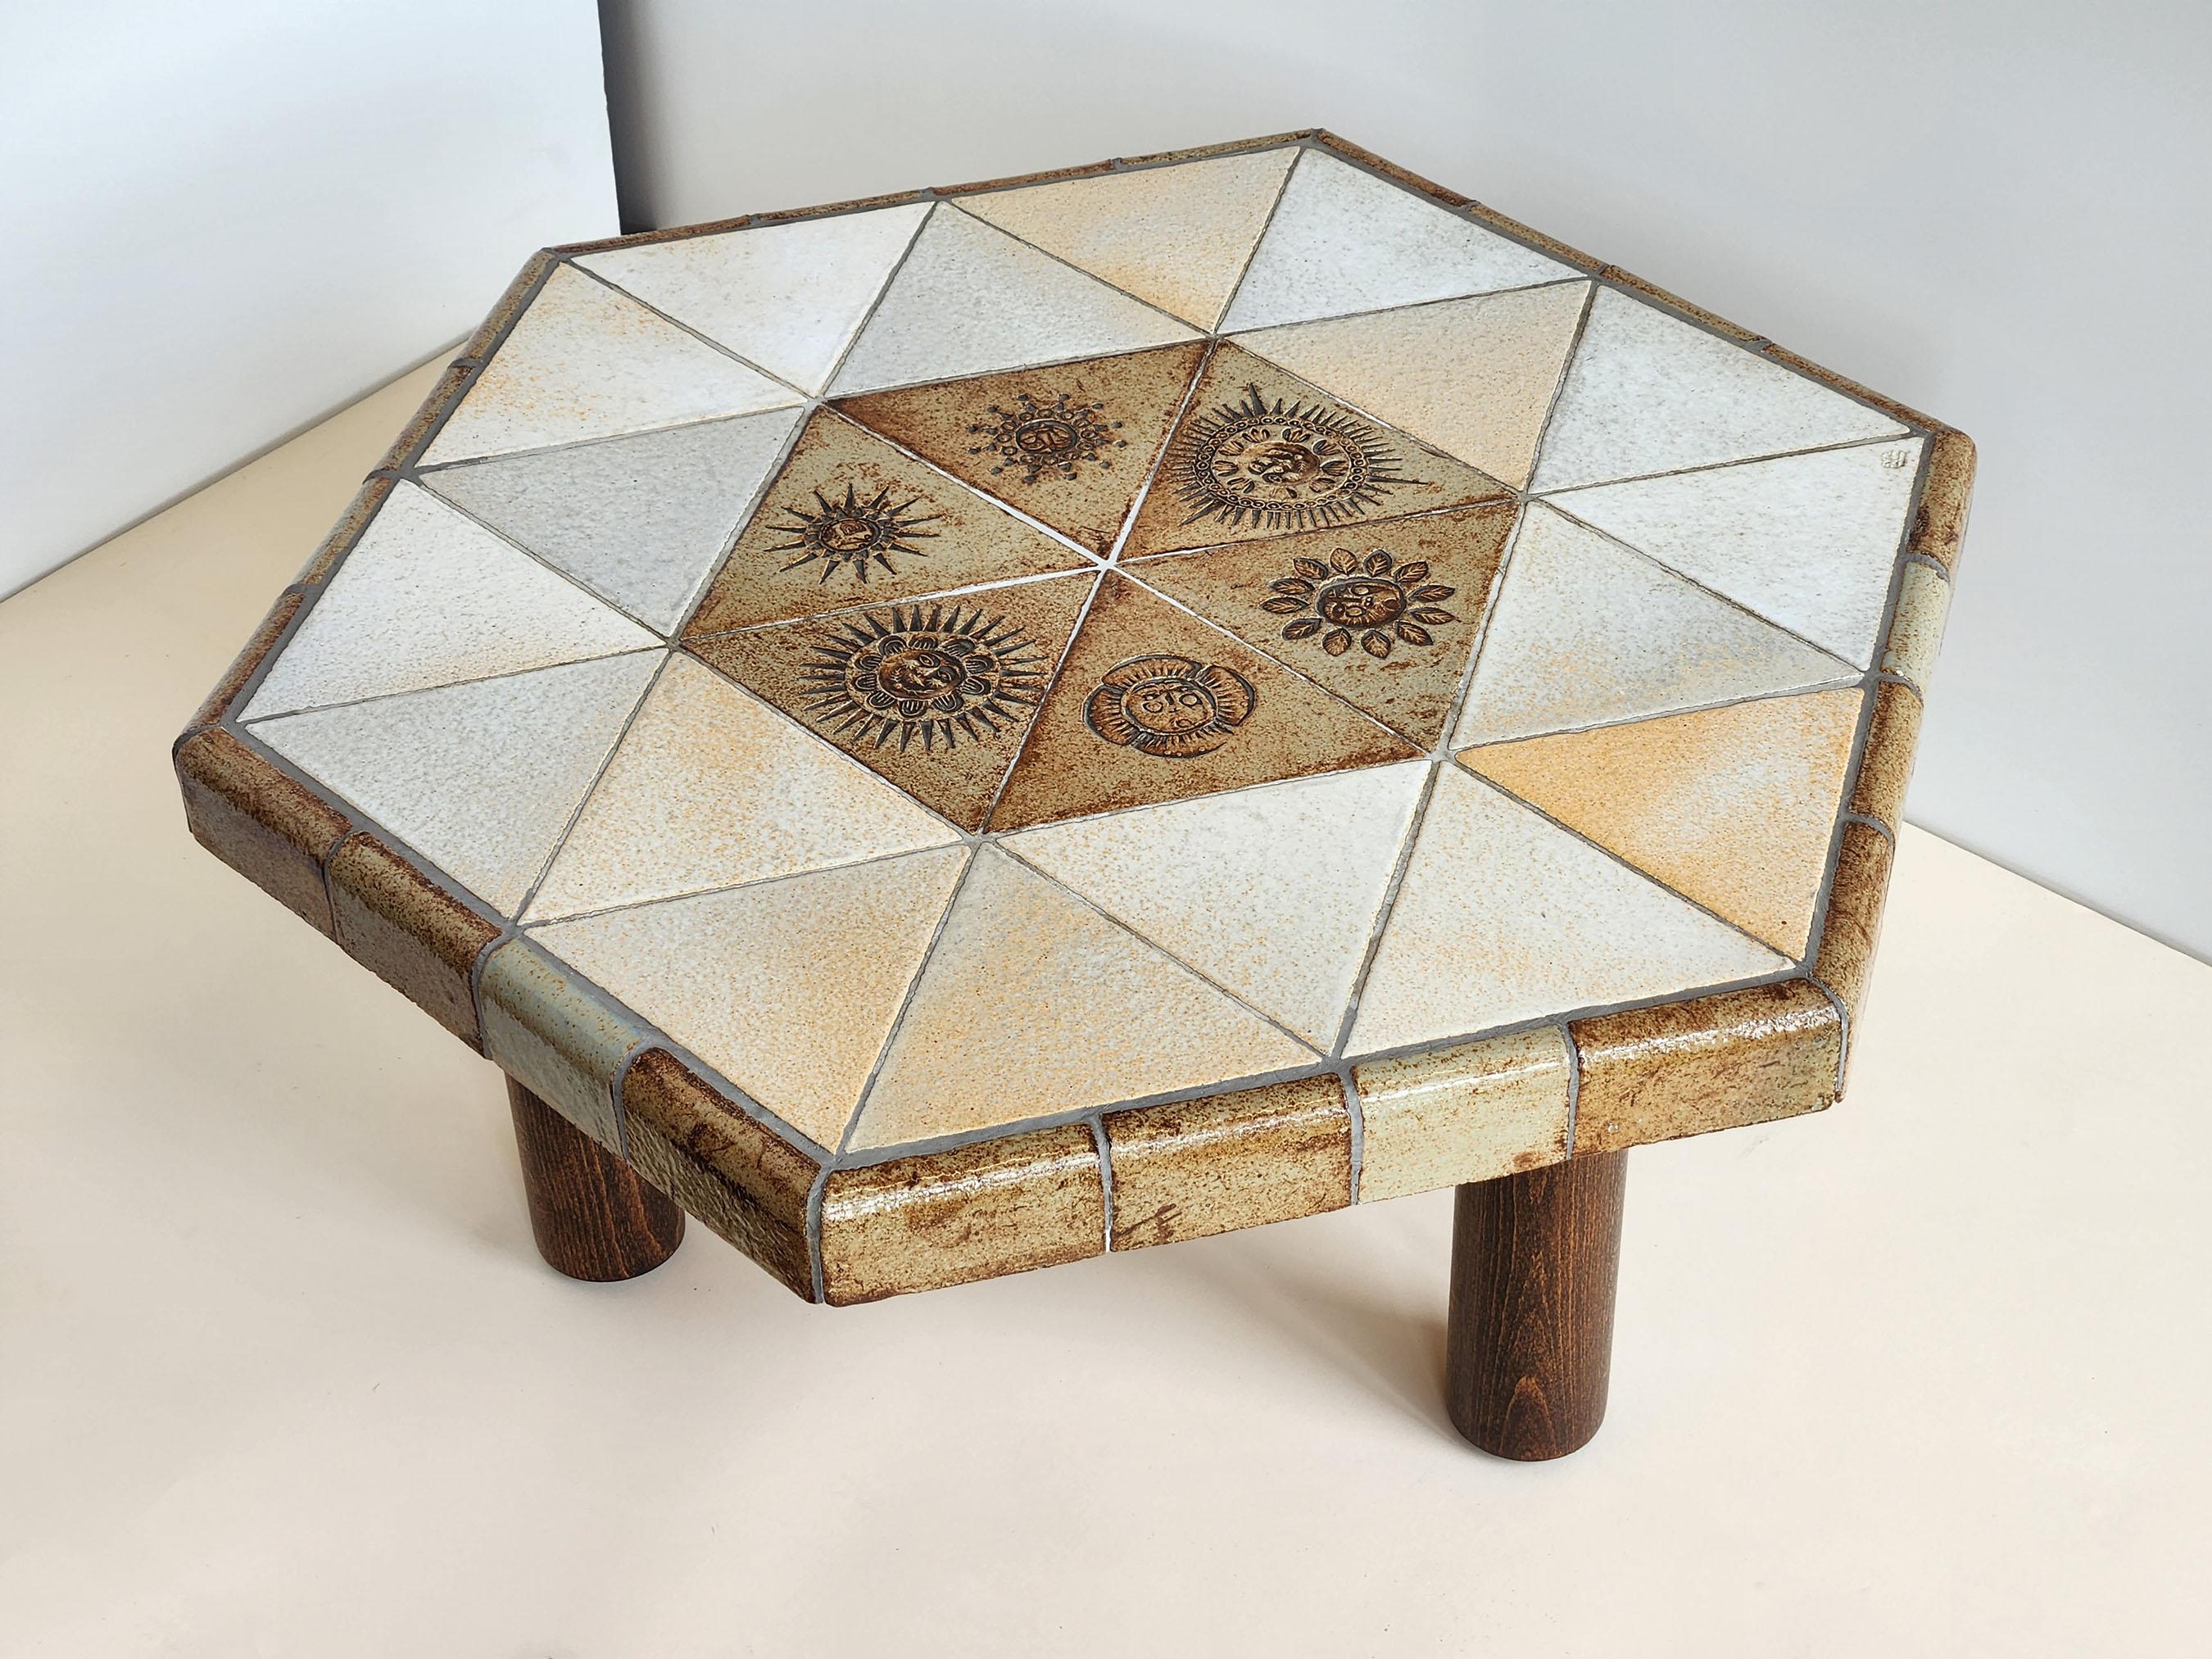 Hexagonal table with triangular ceramic tiles. 

Vallauris, France, 1970s.